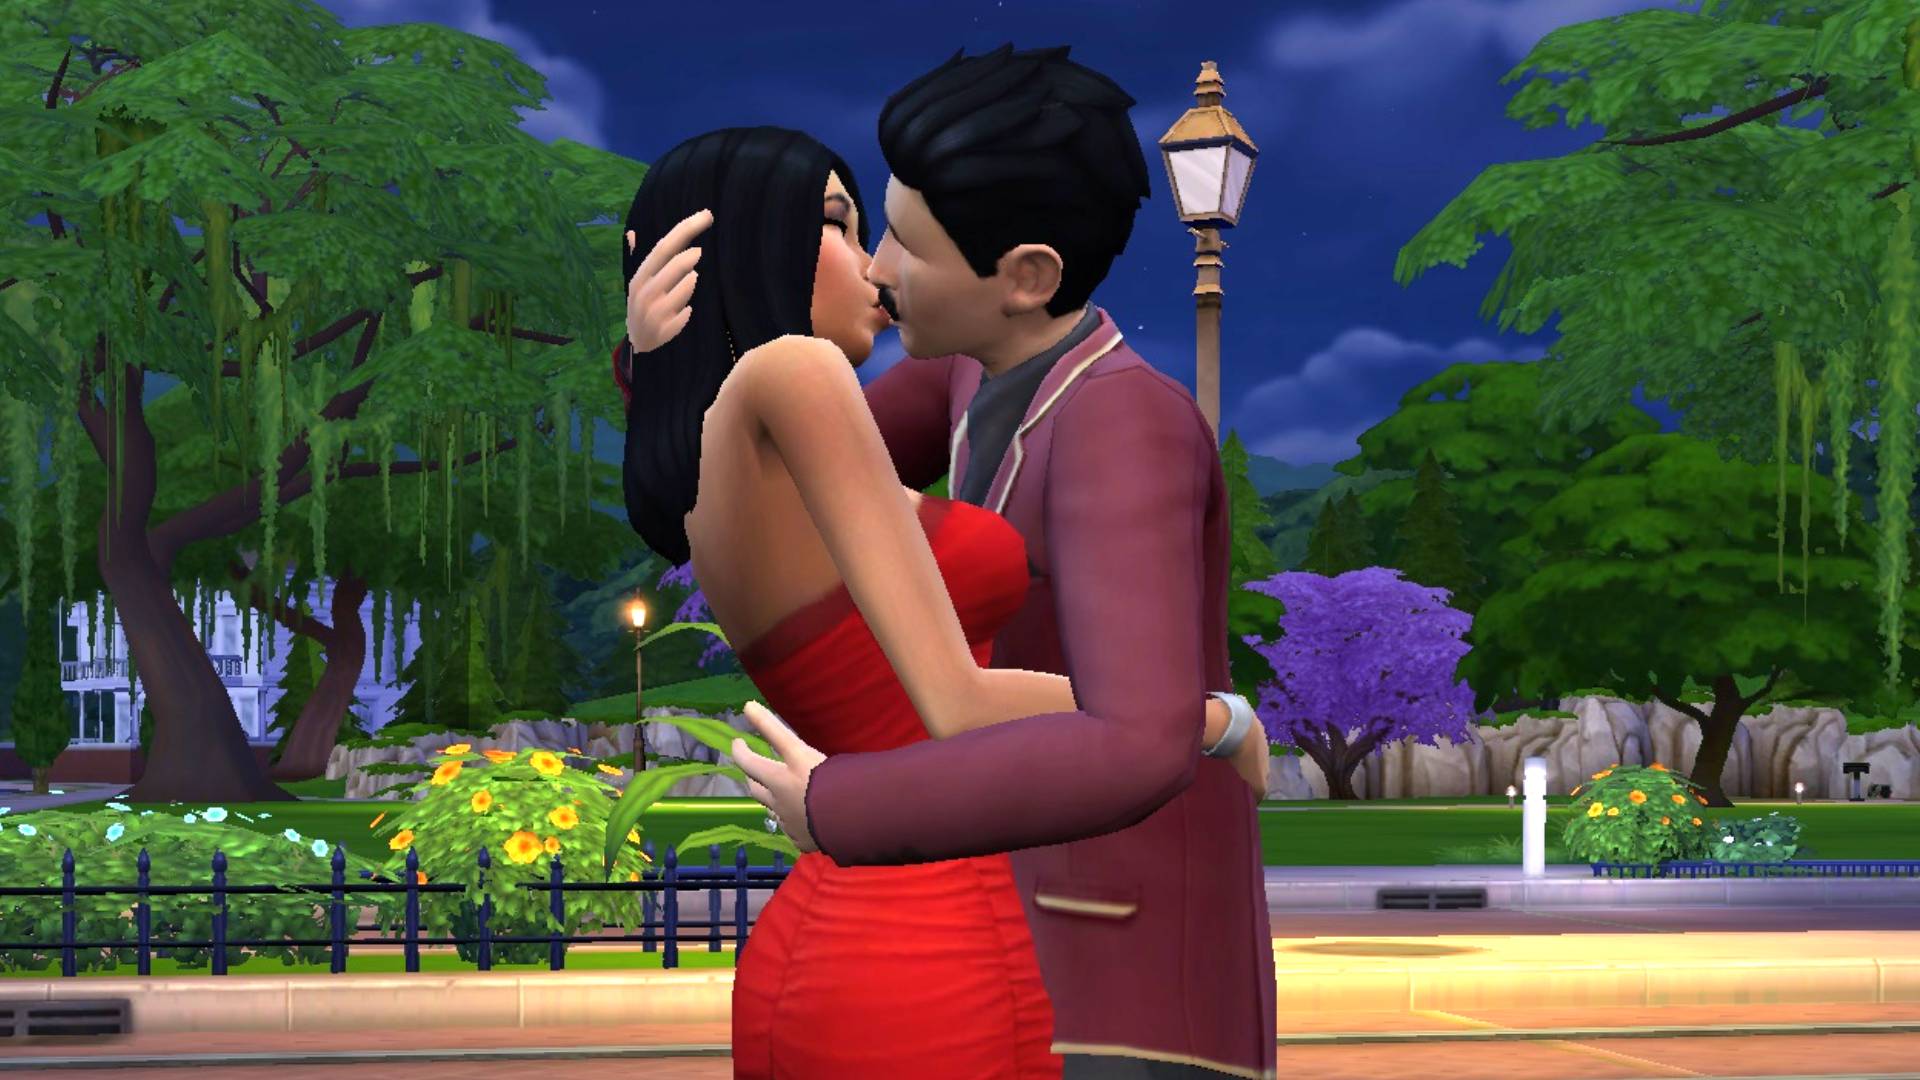 Sims 4 incest mod